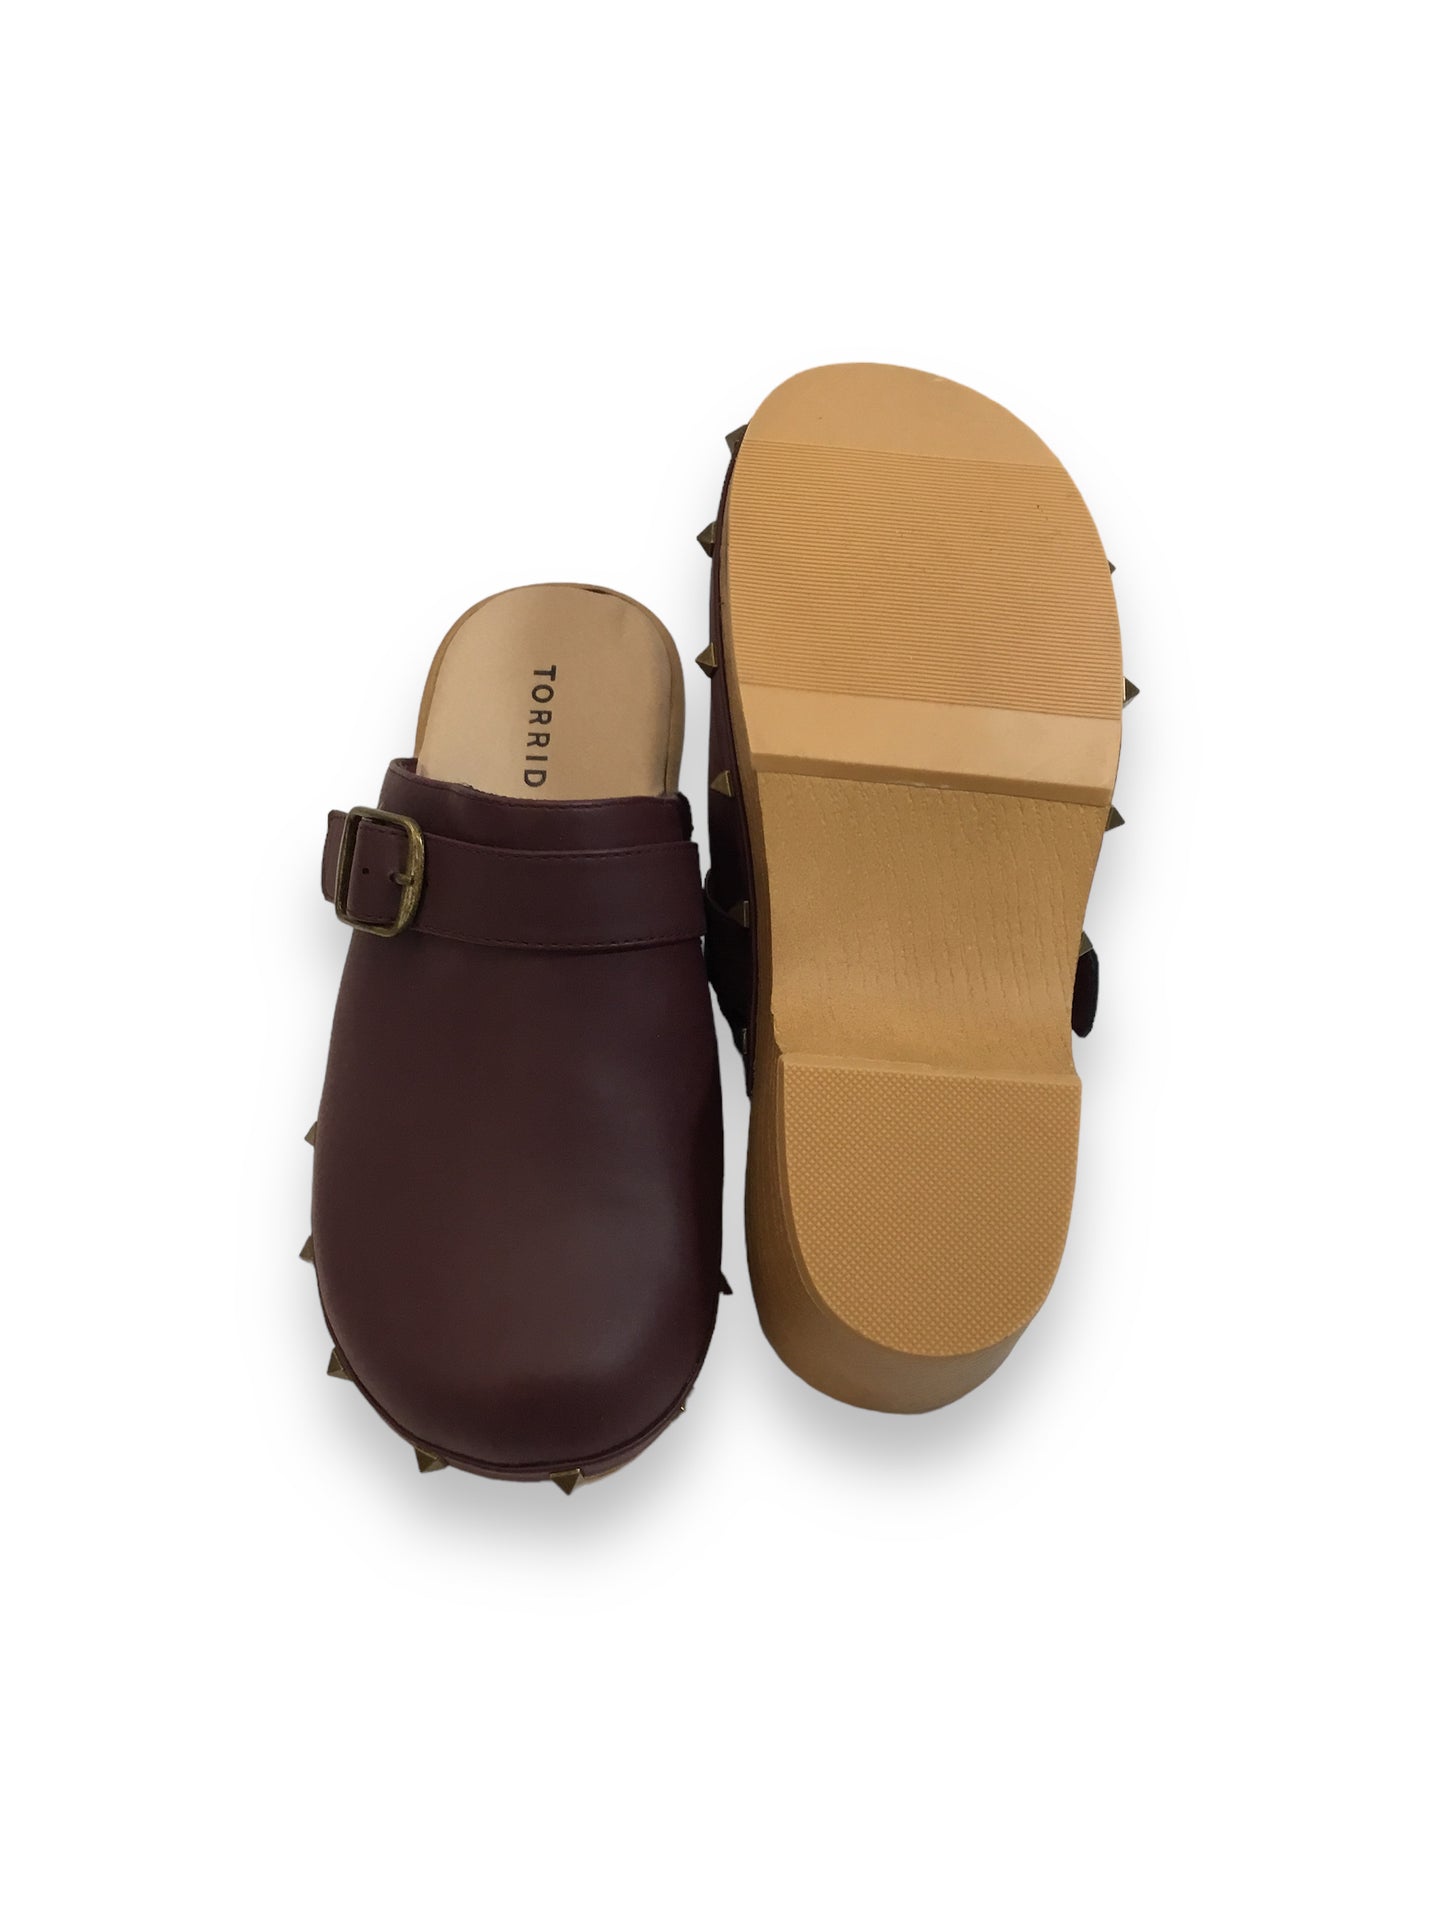 Shoes Flats Mule & Slide By Torrid  Size: 8